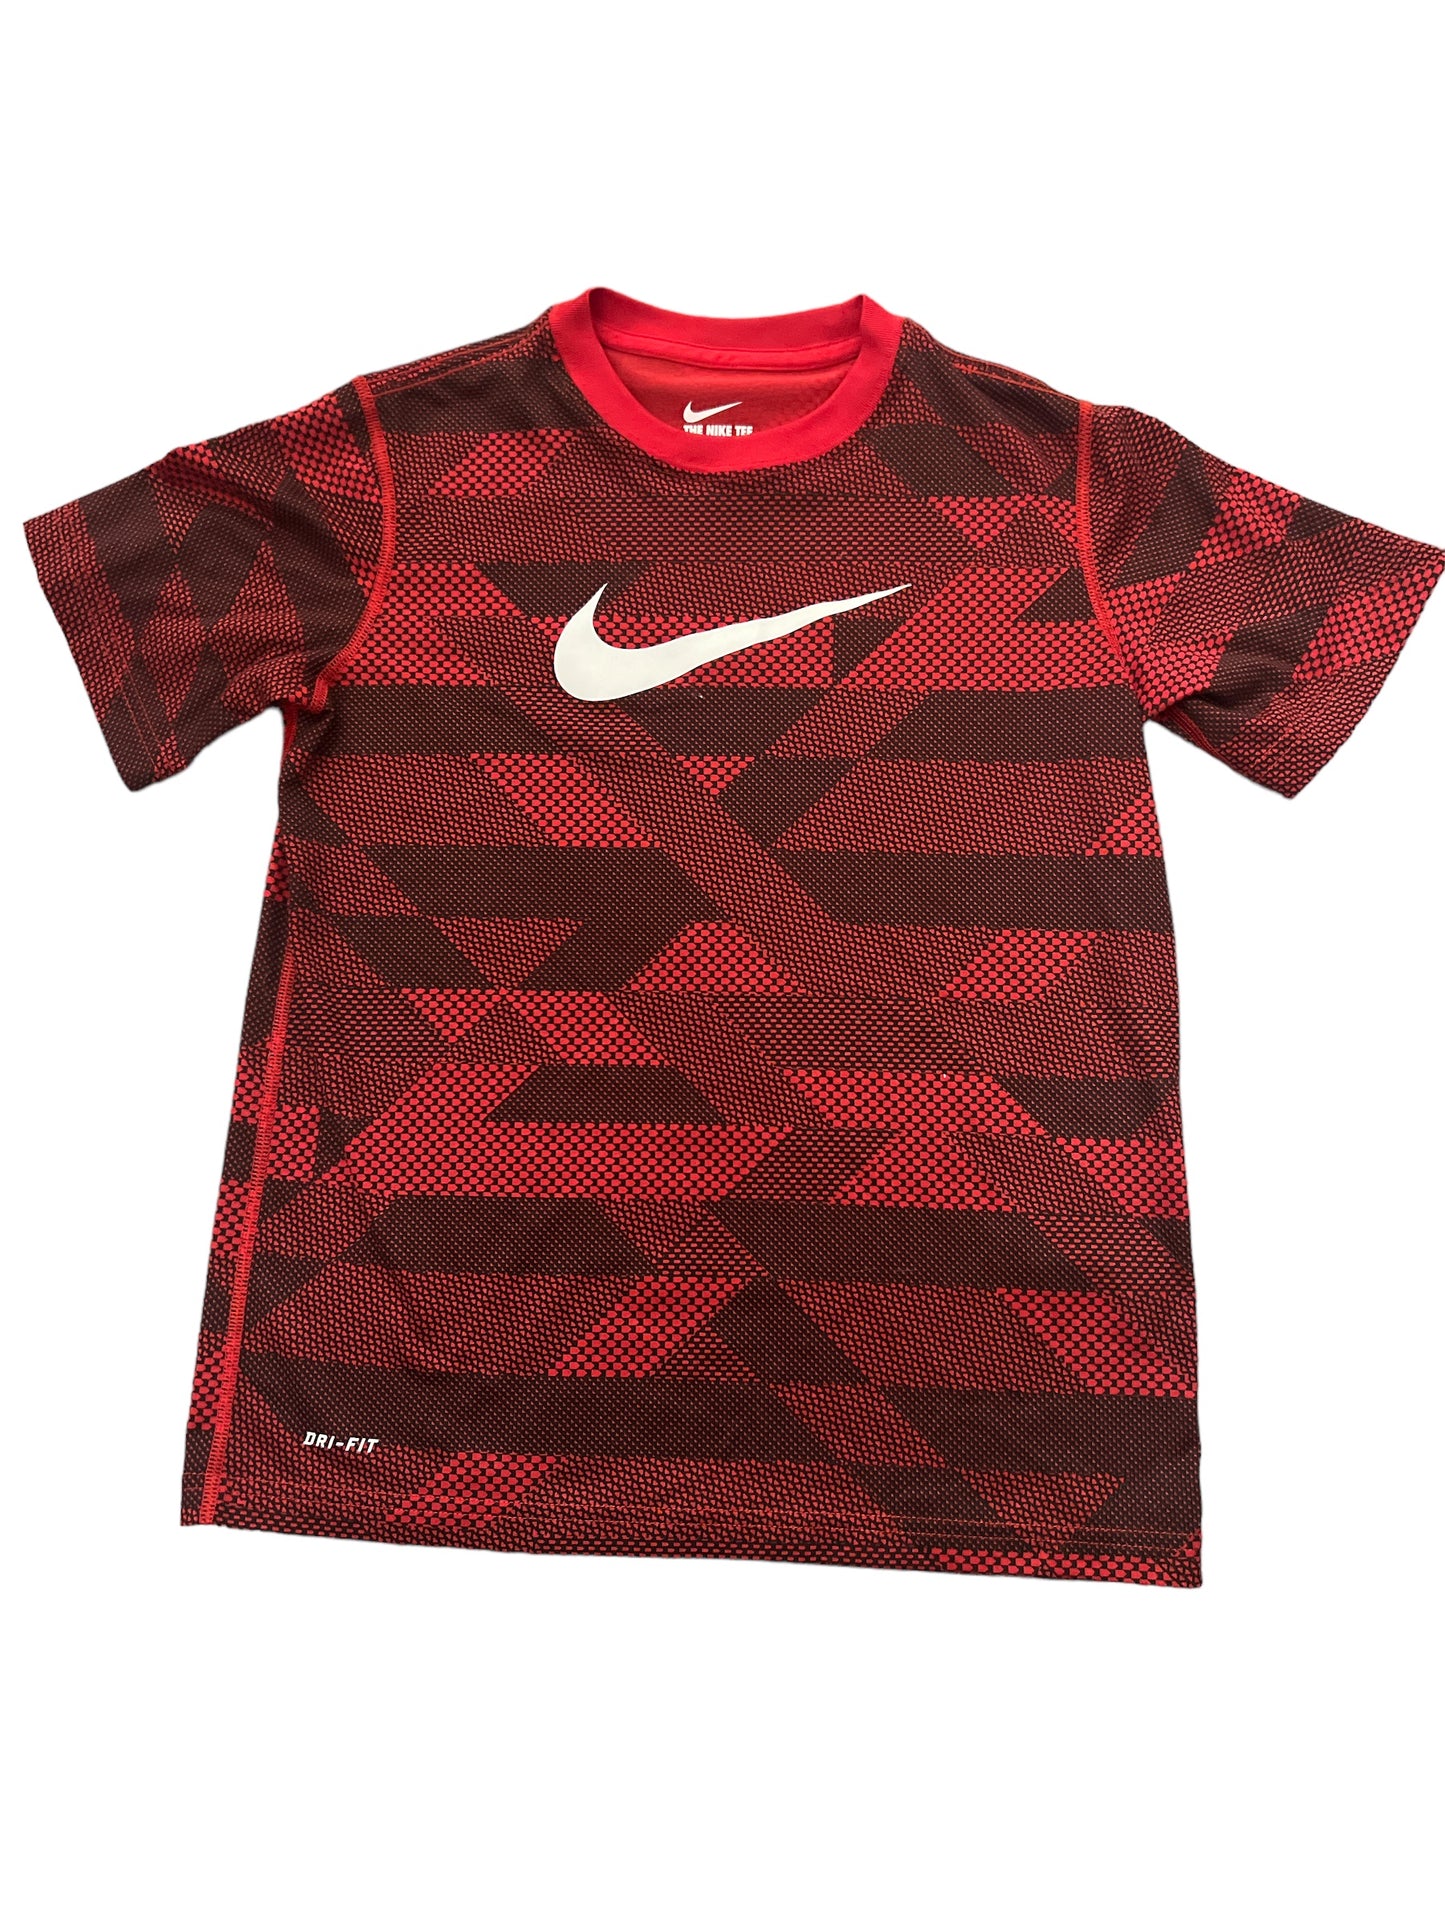 Boys Red Nike Shirt